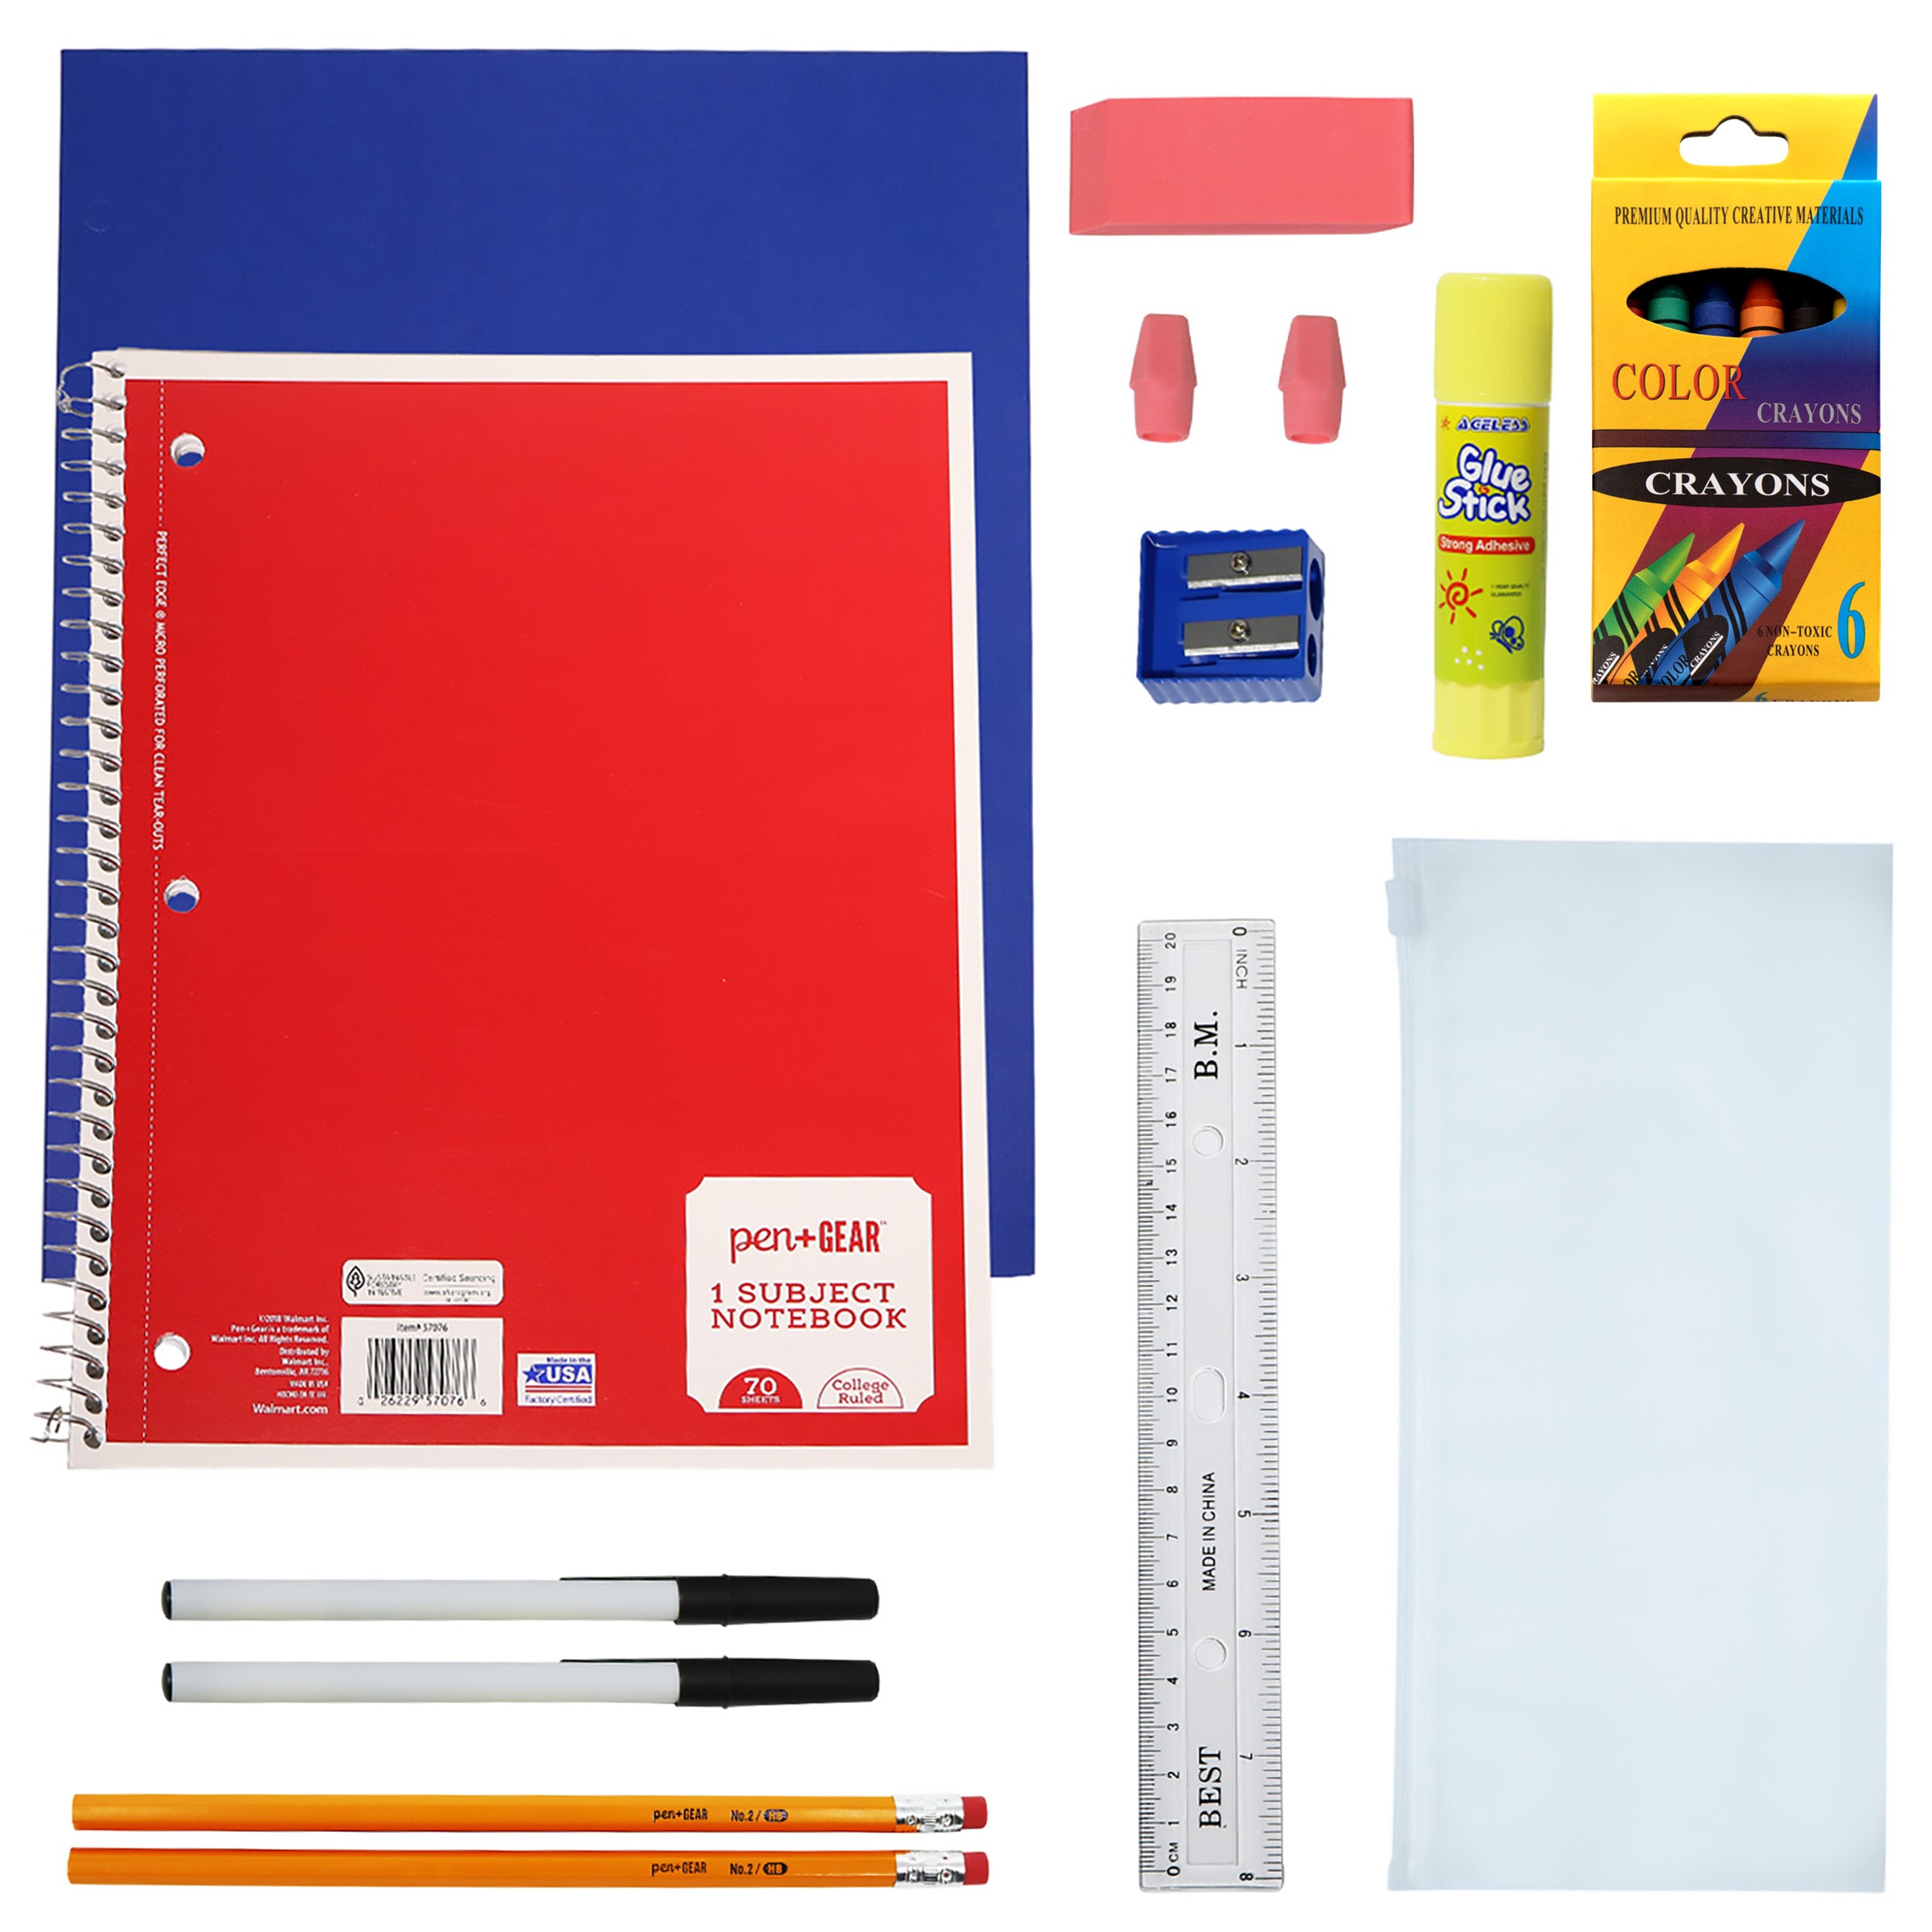 Wholesale 24 Piece School Supply Kit —